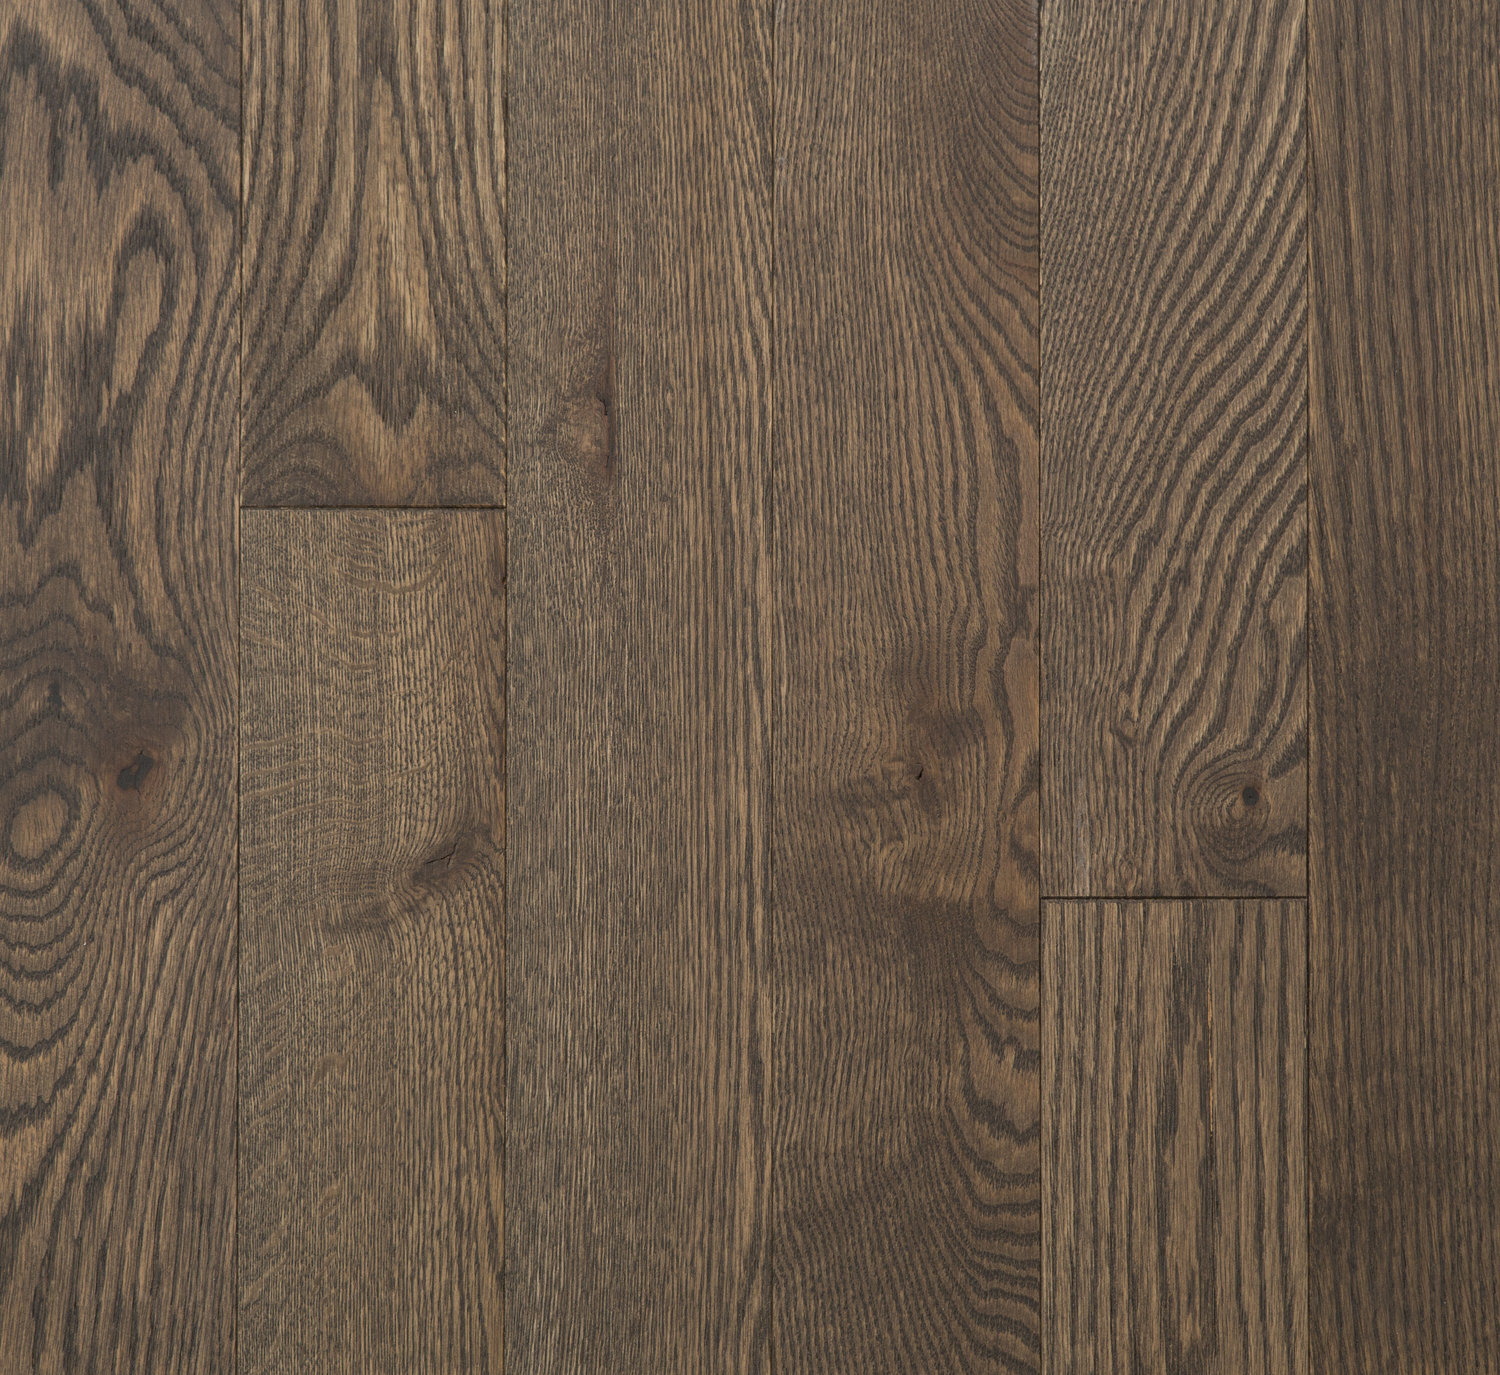 Gryphon Red Oak Boardwalk Hardwood Floors